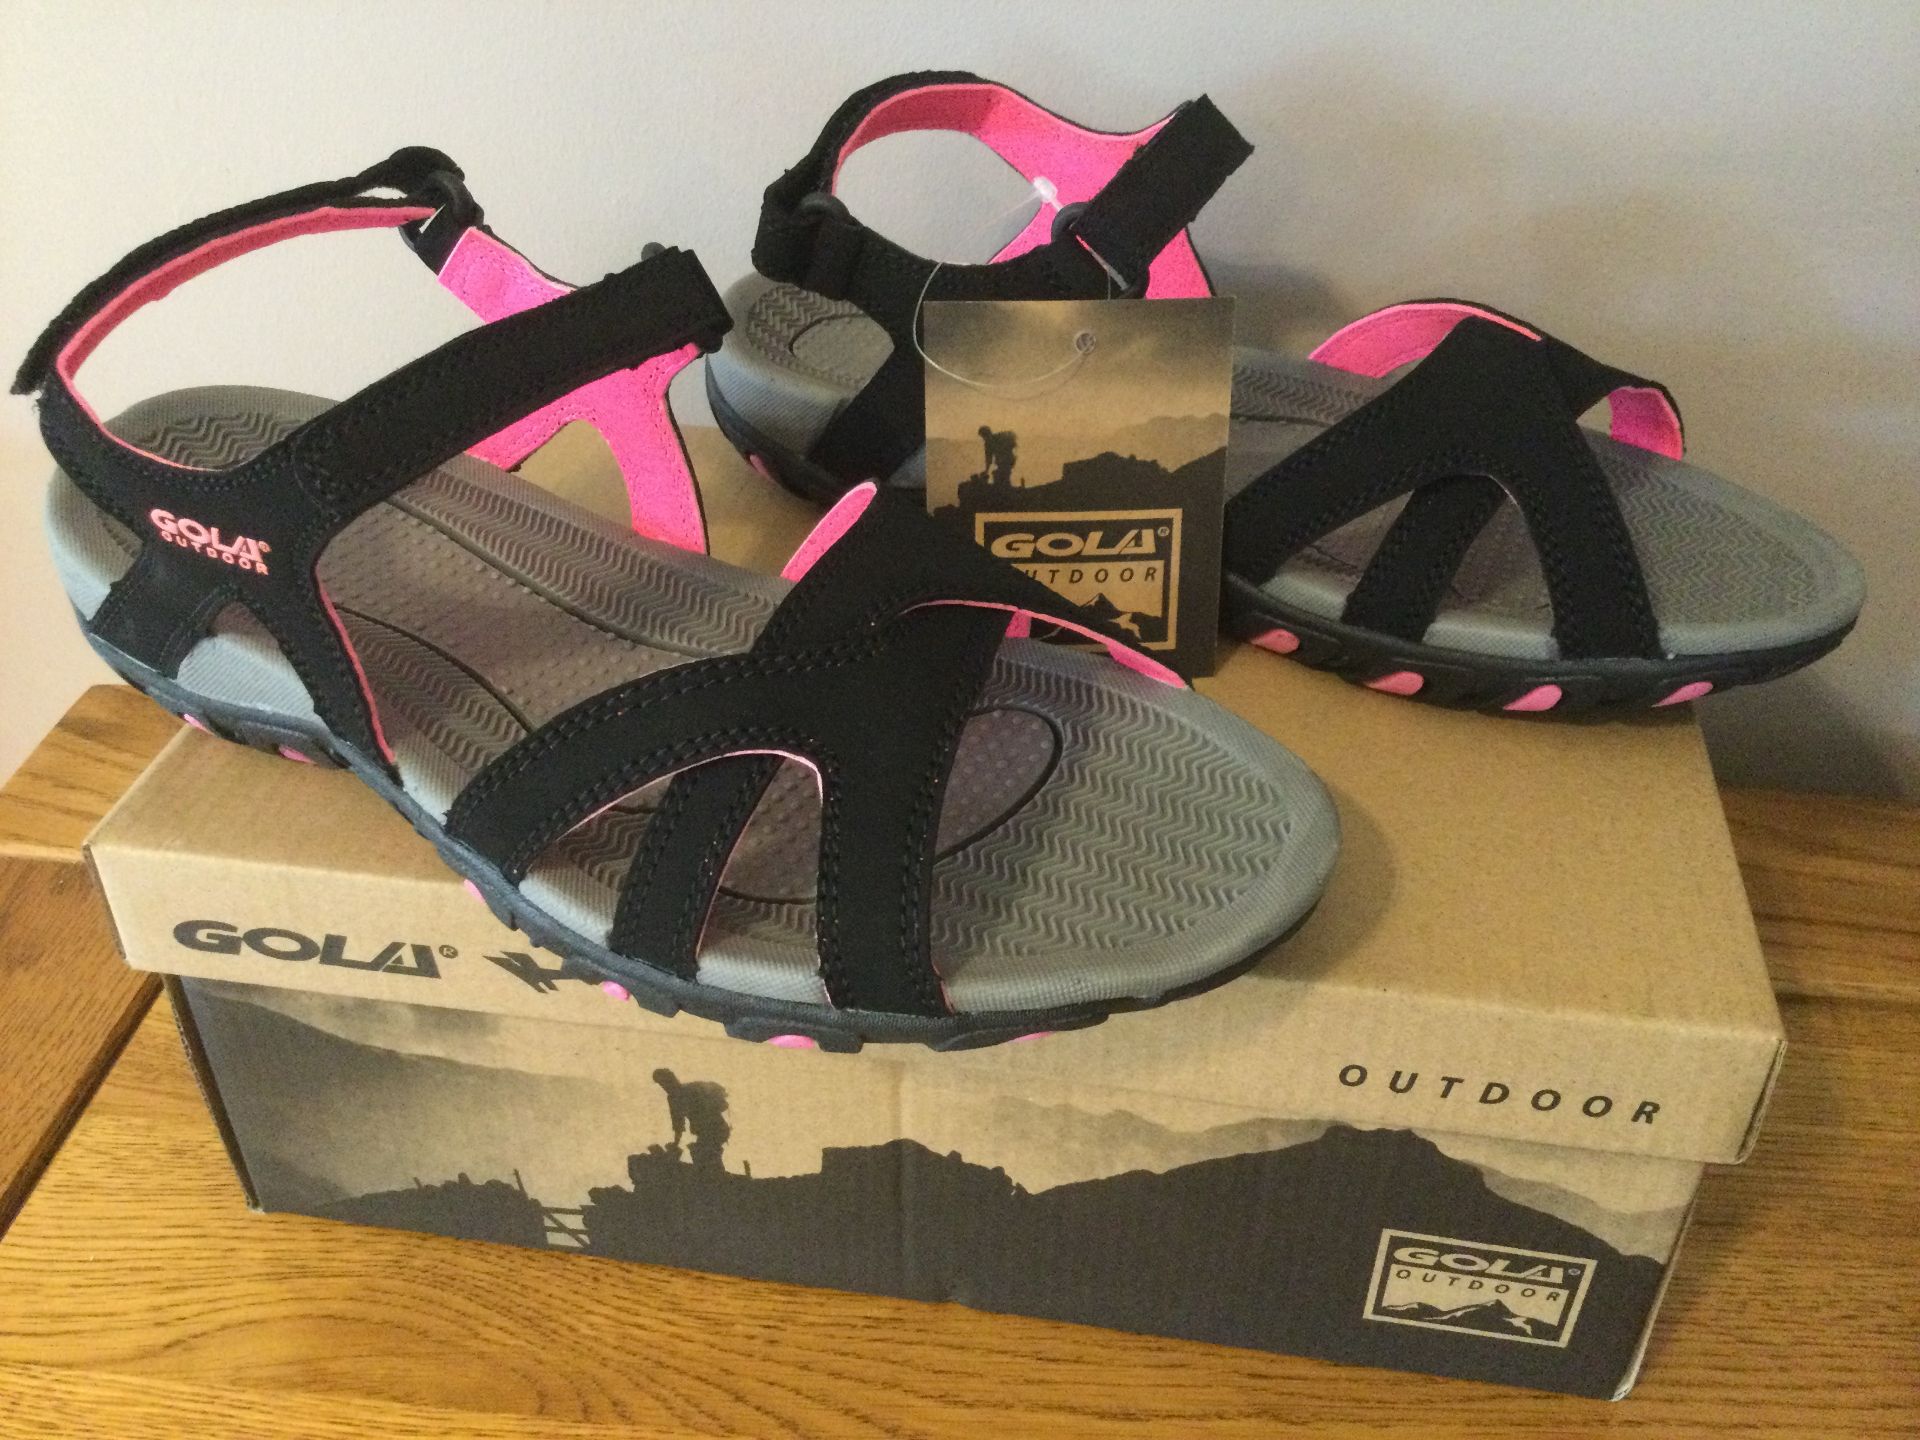 Gola Womens “Cedar” Hiking Sandals, Black/Hot Pink, Size 6 - Brand New